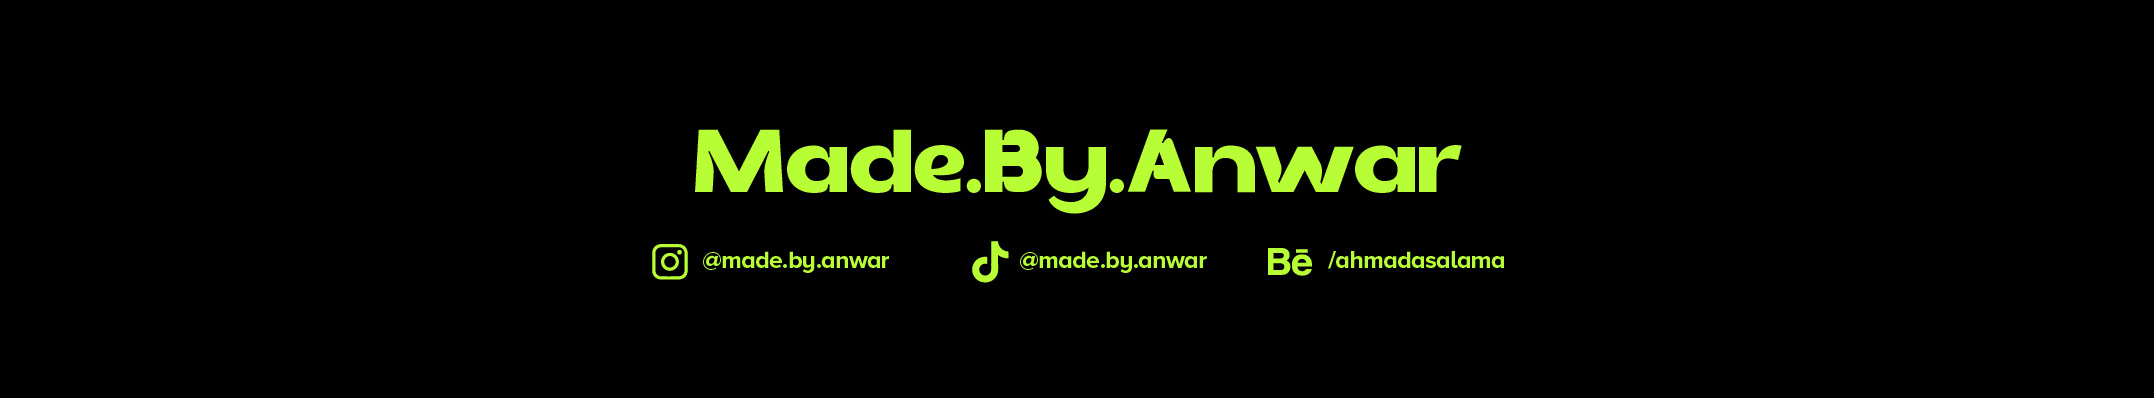 Ahmad Anwar's profile banner